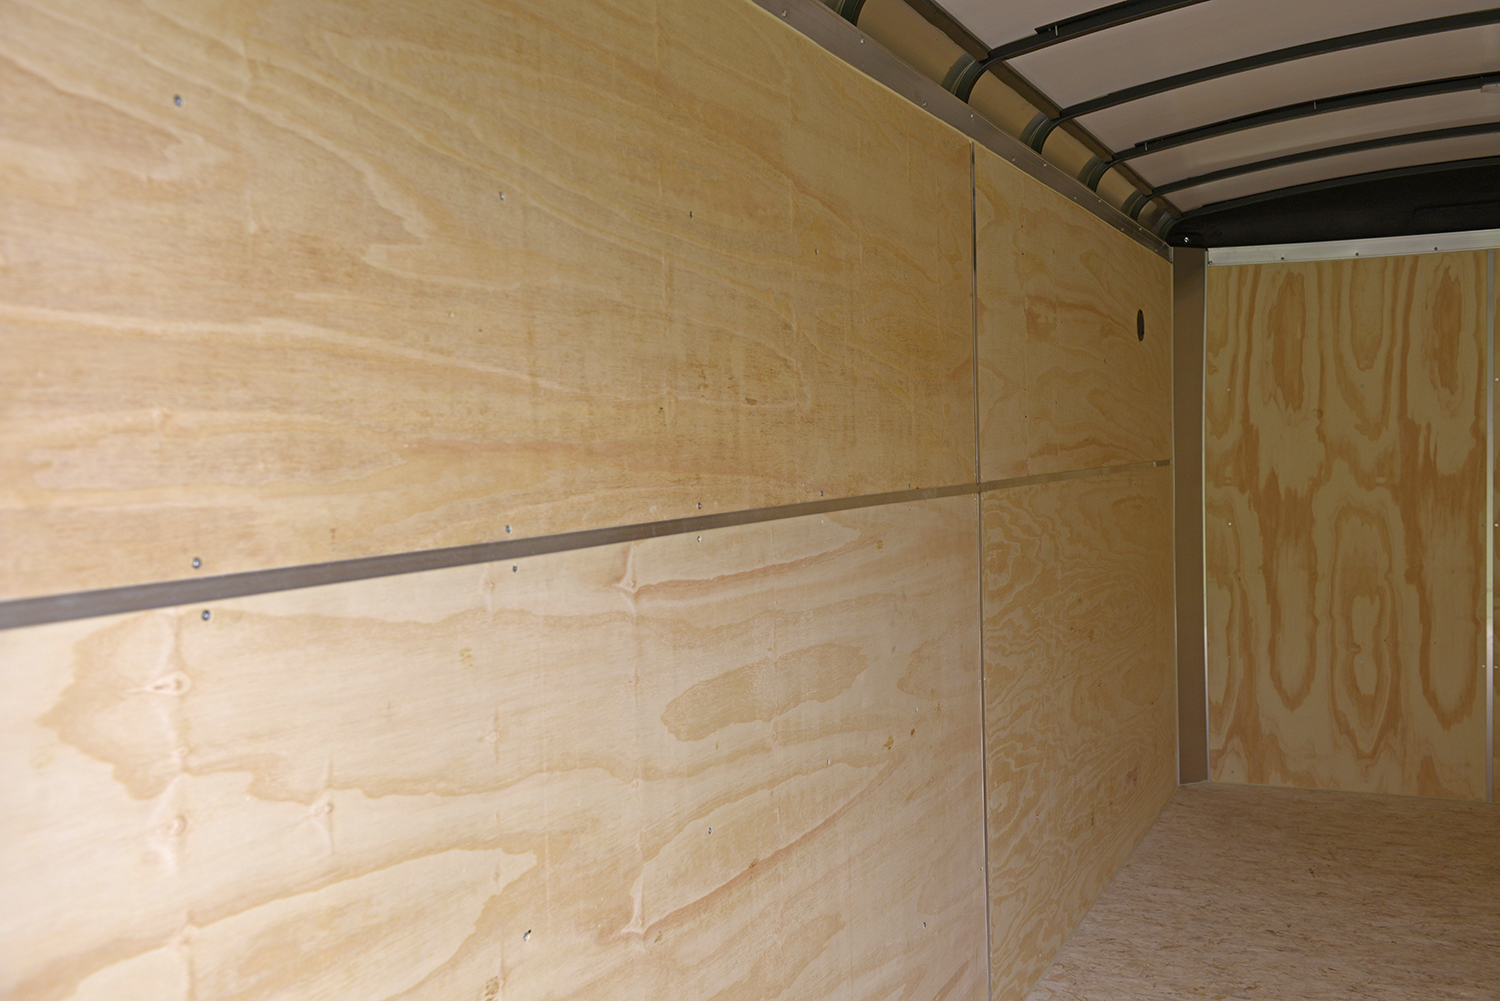 Inside of trailer view, Aluminum H-Trim with no staples